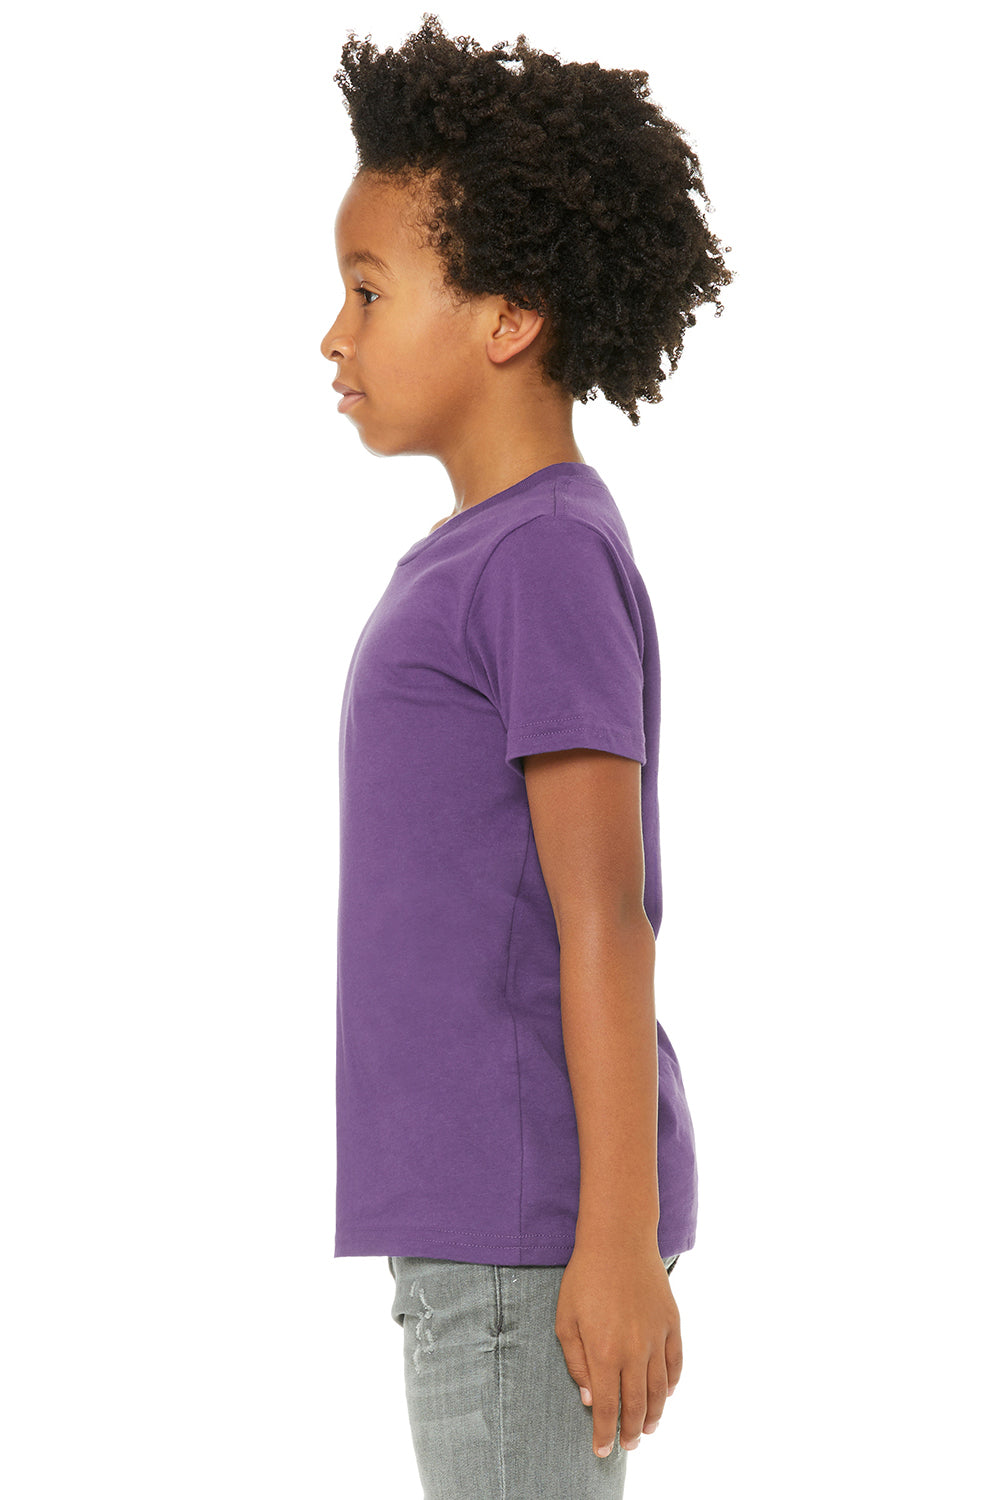 Bella + Canvas 3001Y Youth Jersey Short Sleeve Crewneck T-Shirt Royal Purple Model Side